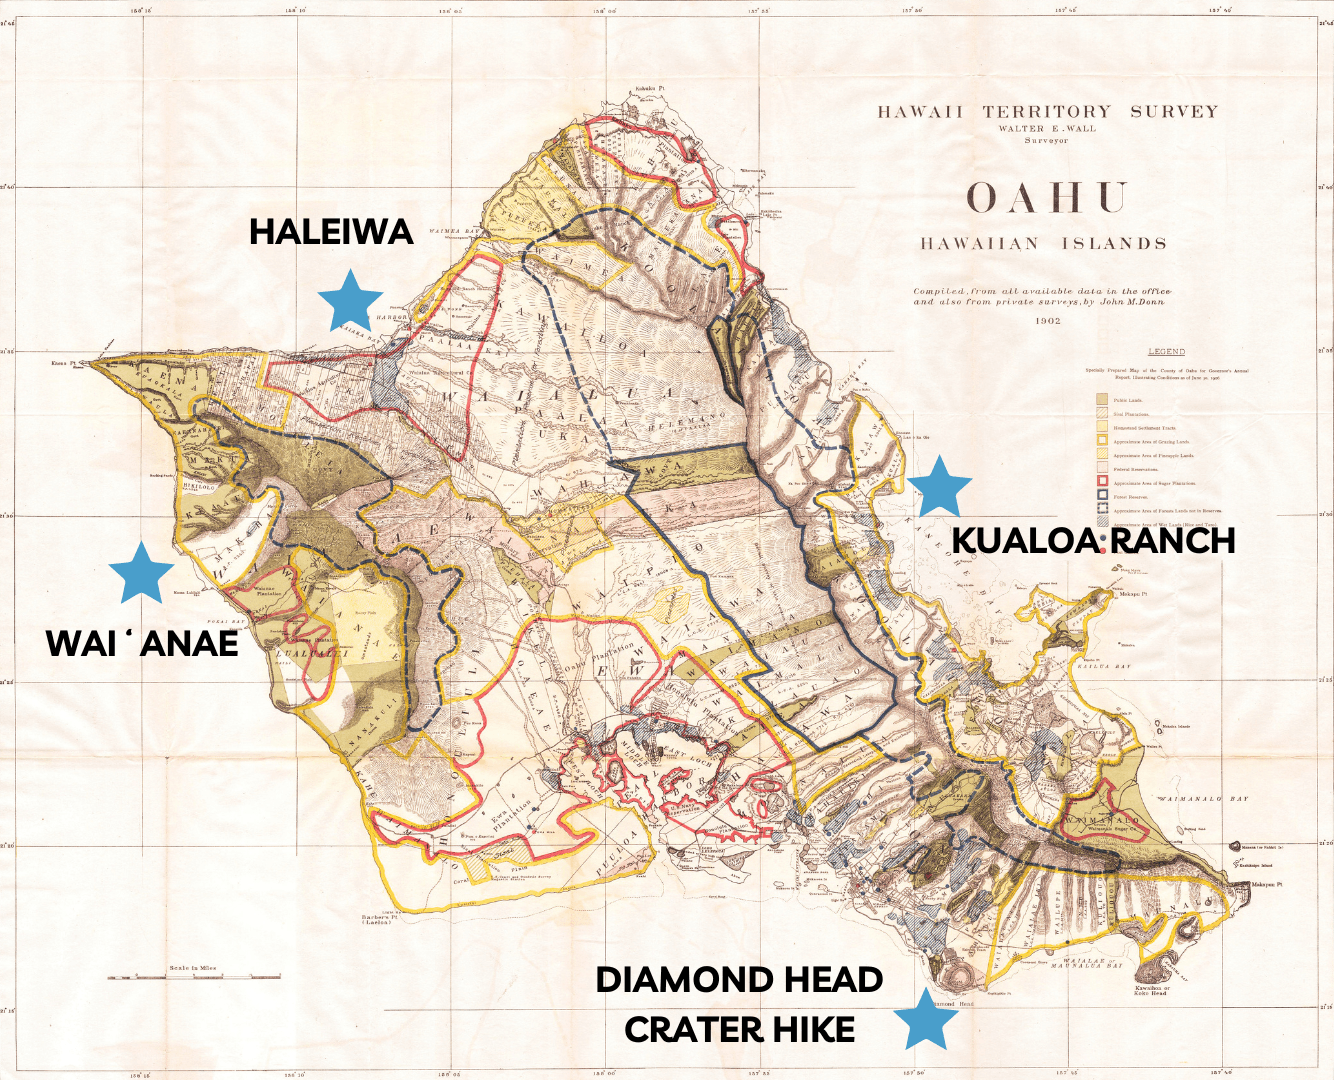 Oahu Adventure Tours